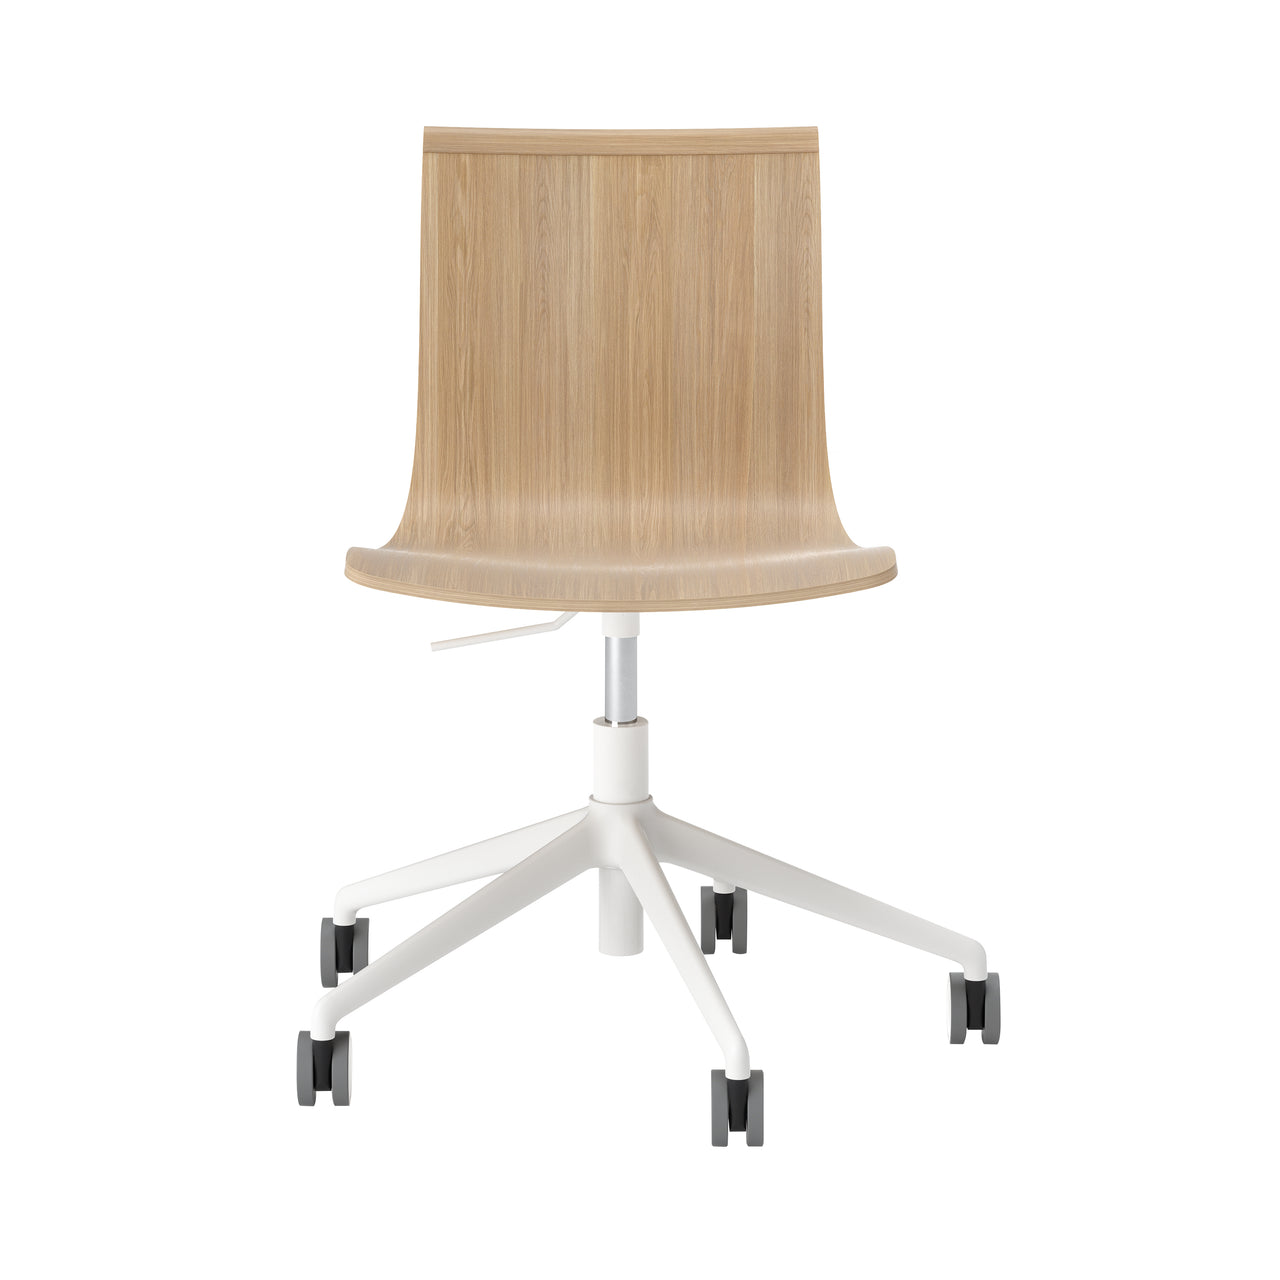 Serif Chair: 5 Star Base + Castors + White + Natural Oak